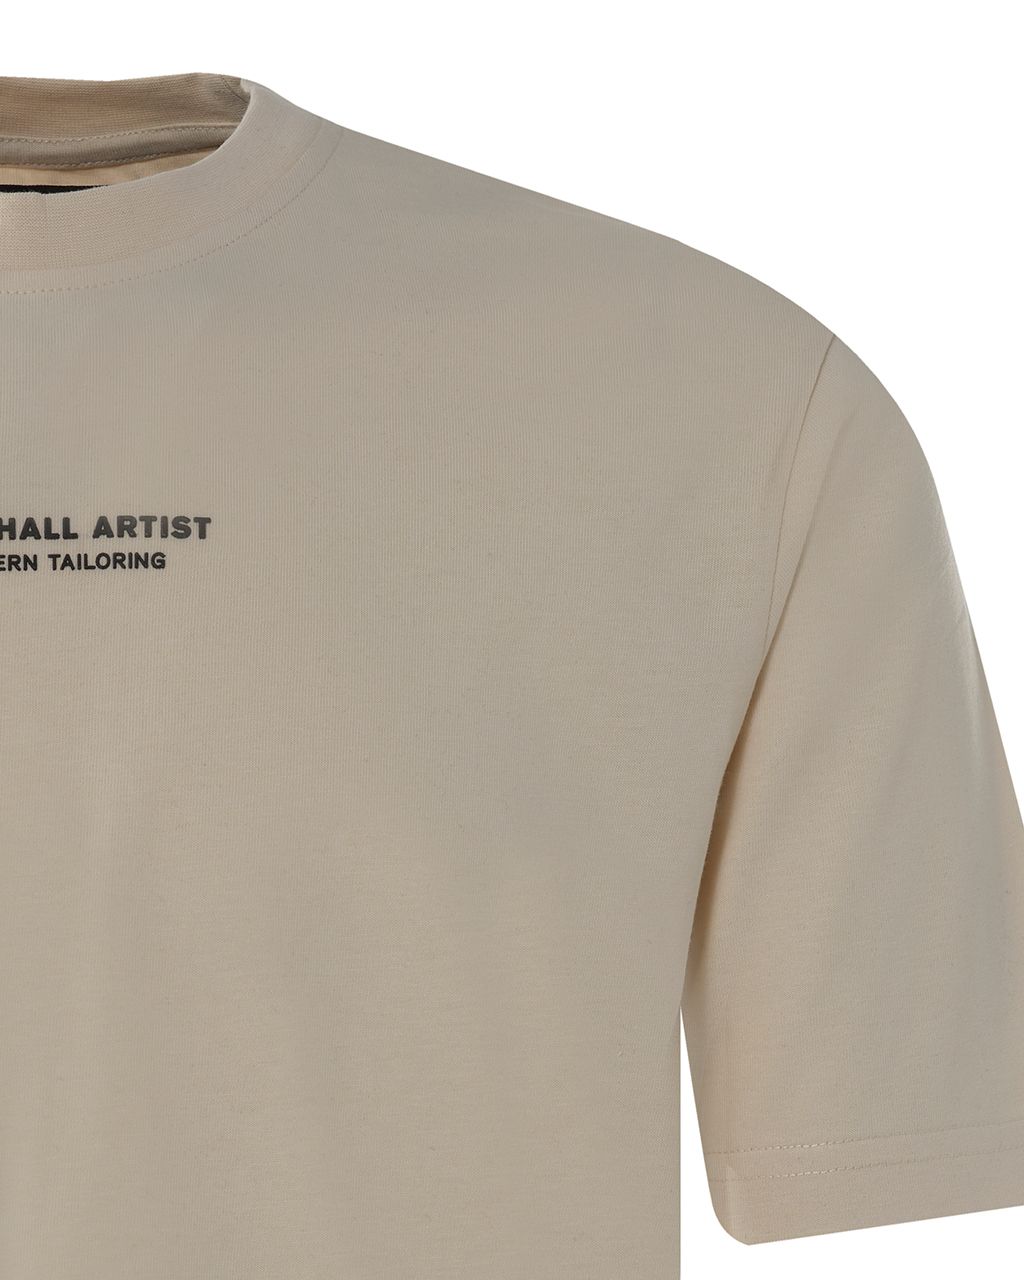 Marshall Artist T-shirt KM Licht grijs 078236-001-L